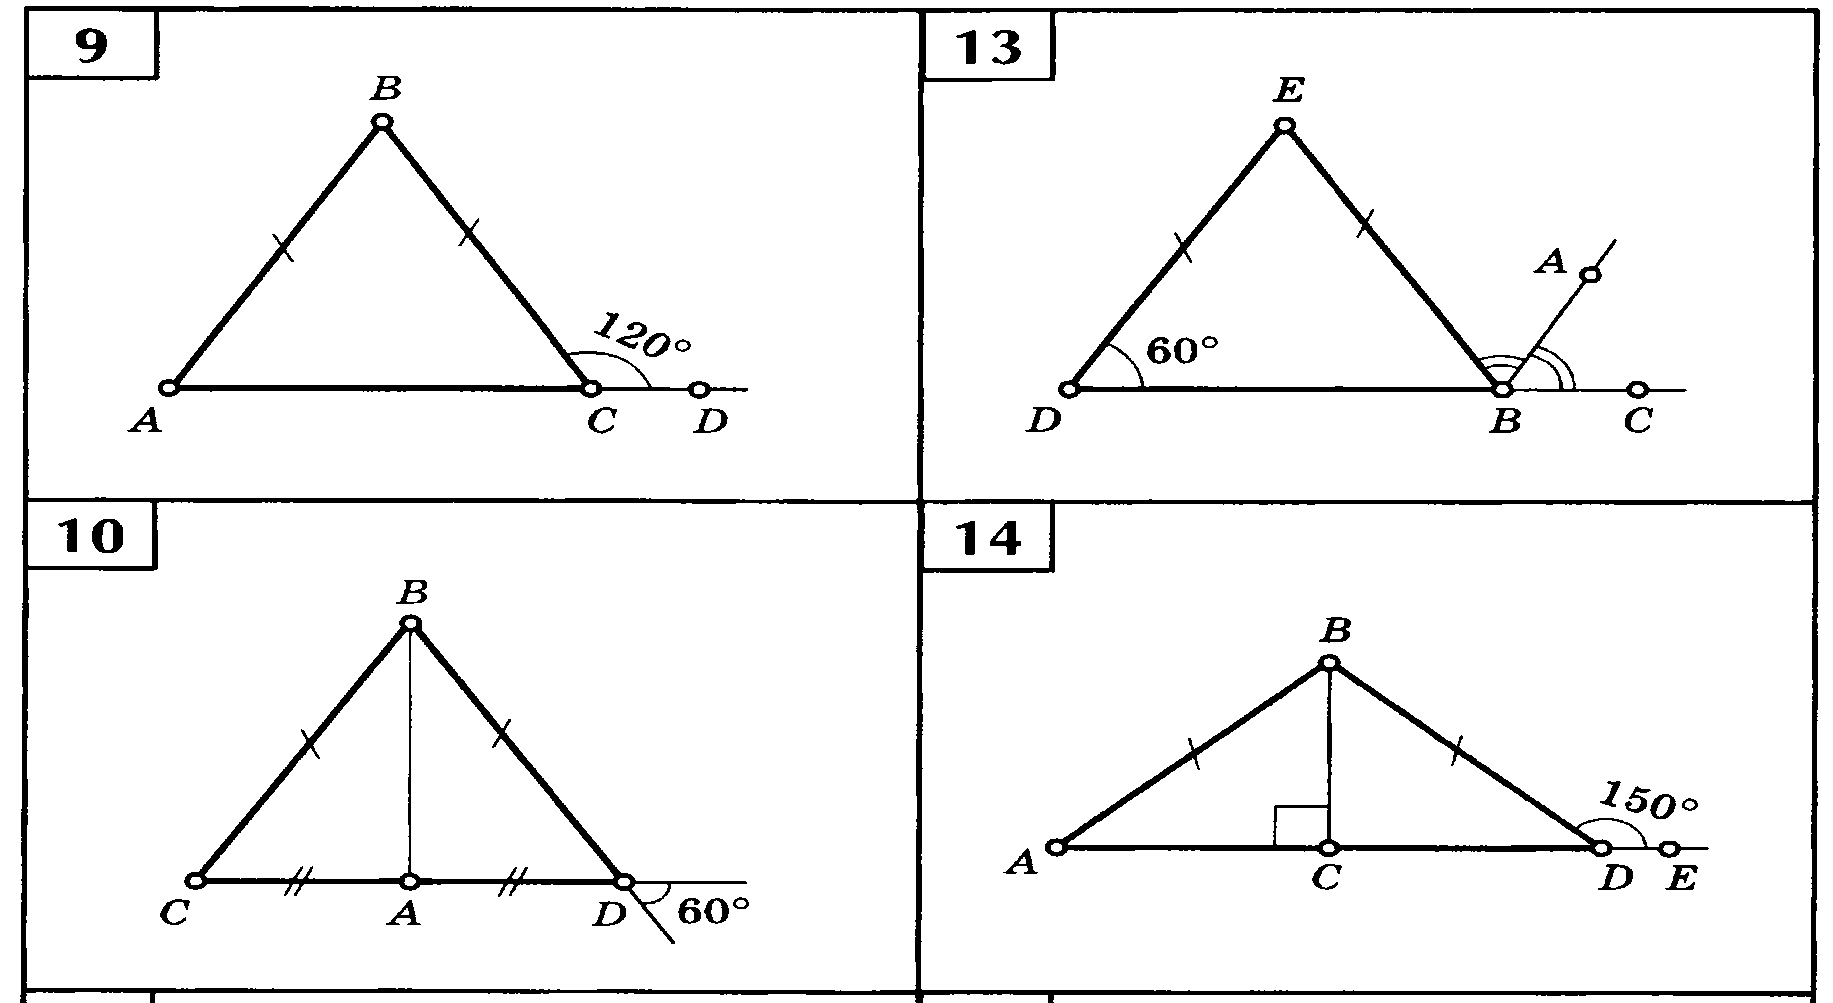 Задачи на равносторонний треугольник. Задачи на равнобедренный треугольник 7 класс. Решение задач по готовым чертежам равнобедренный треугольник 7 класс. Задачи равнобедренный треугольник по готовым чертежам 7. Равнобедренный треугольник 7 класс геометрия задачи.